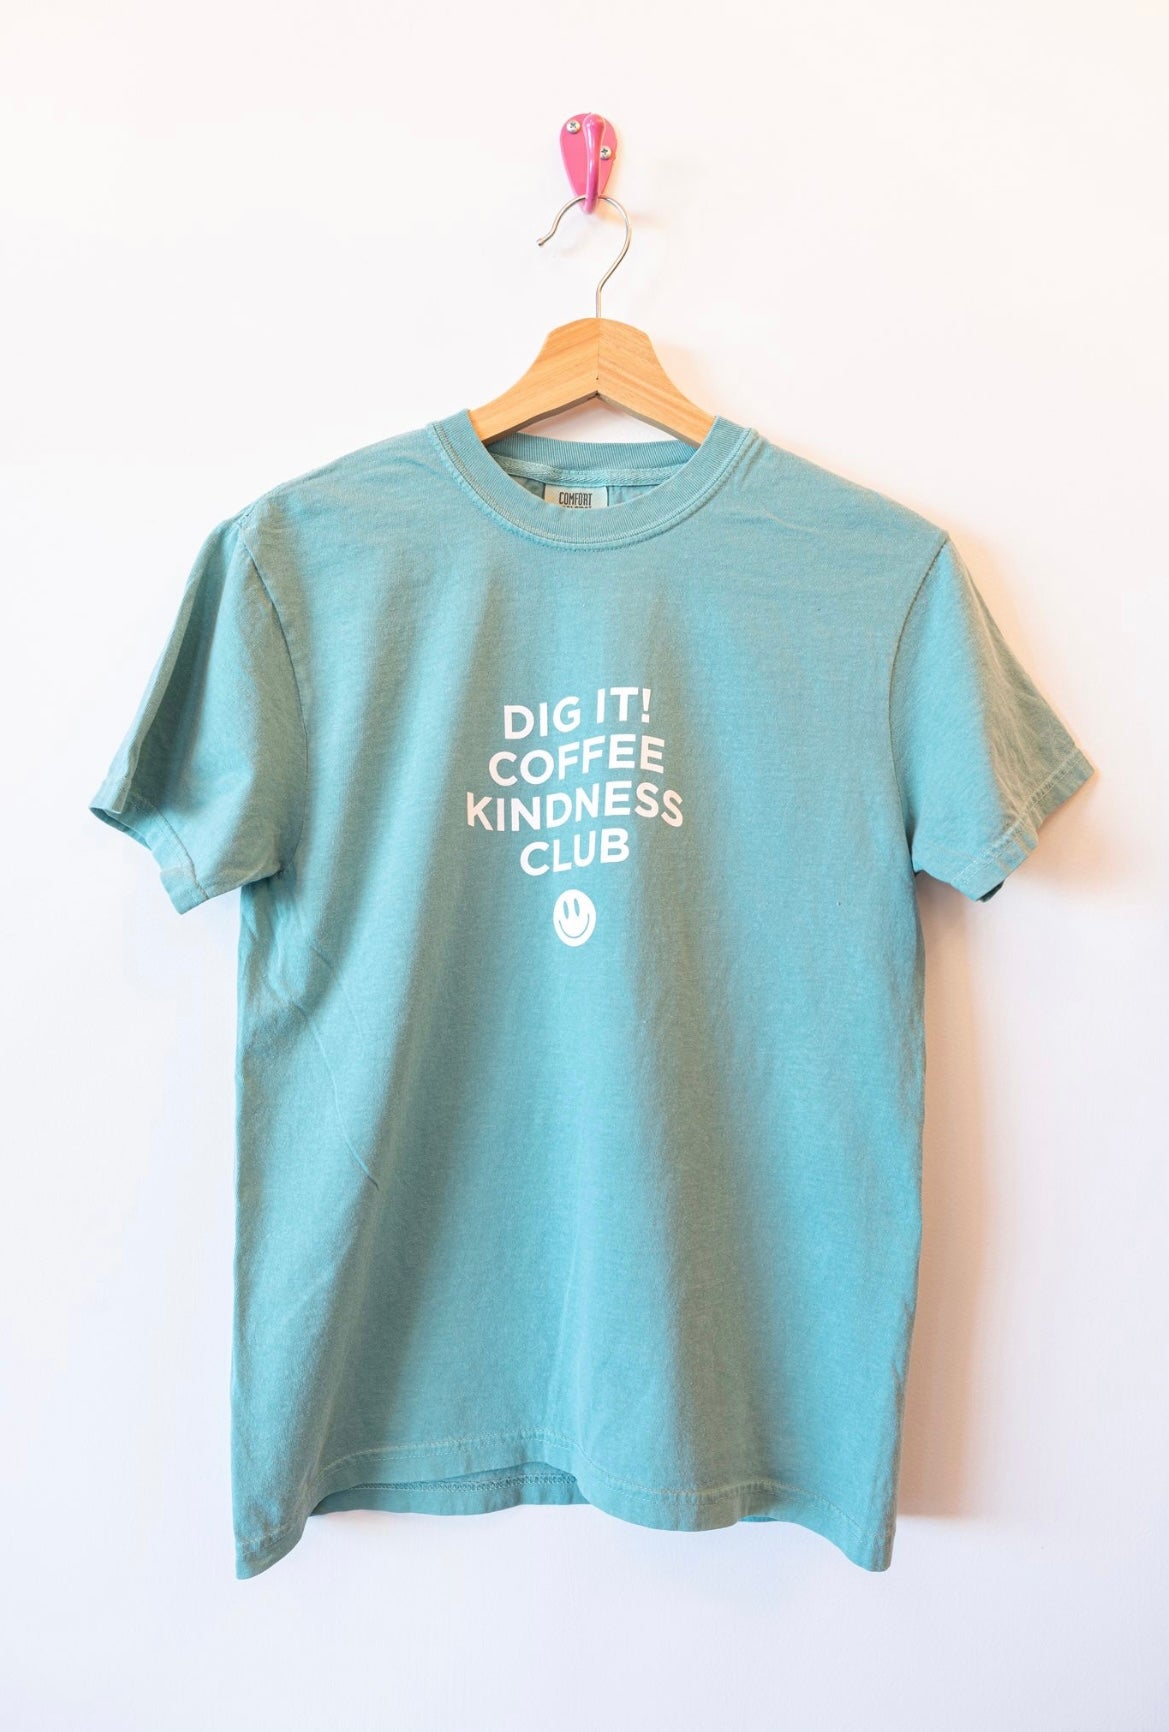 Kids Teal Dig It! Coffee Kindness Club Tshirt